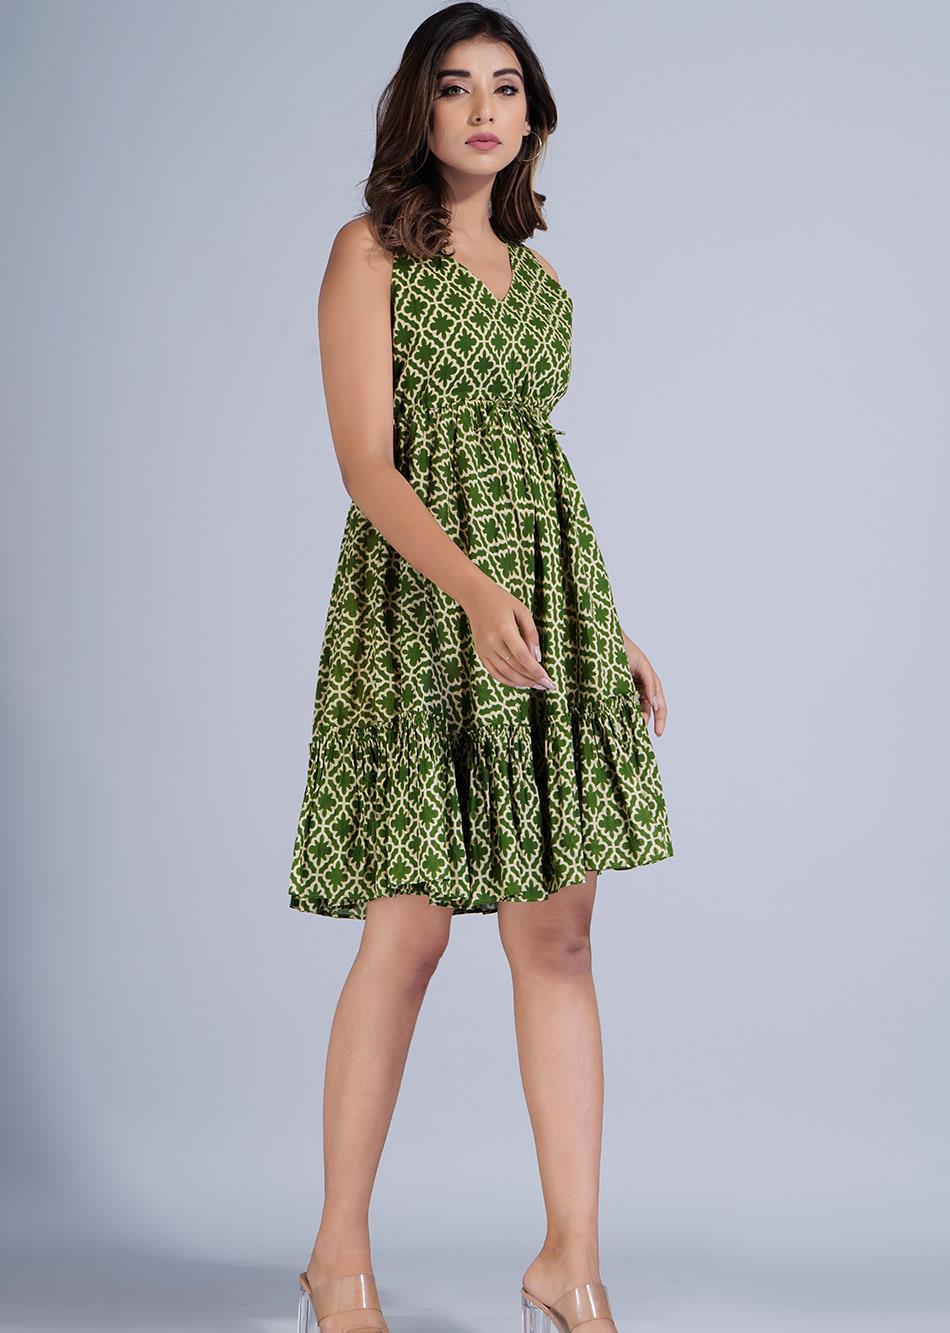 Green Printed Short Tier Dress By Jovi Fashion